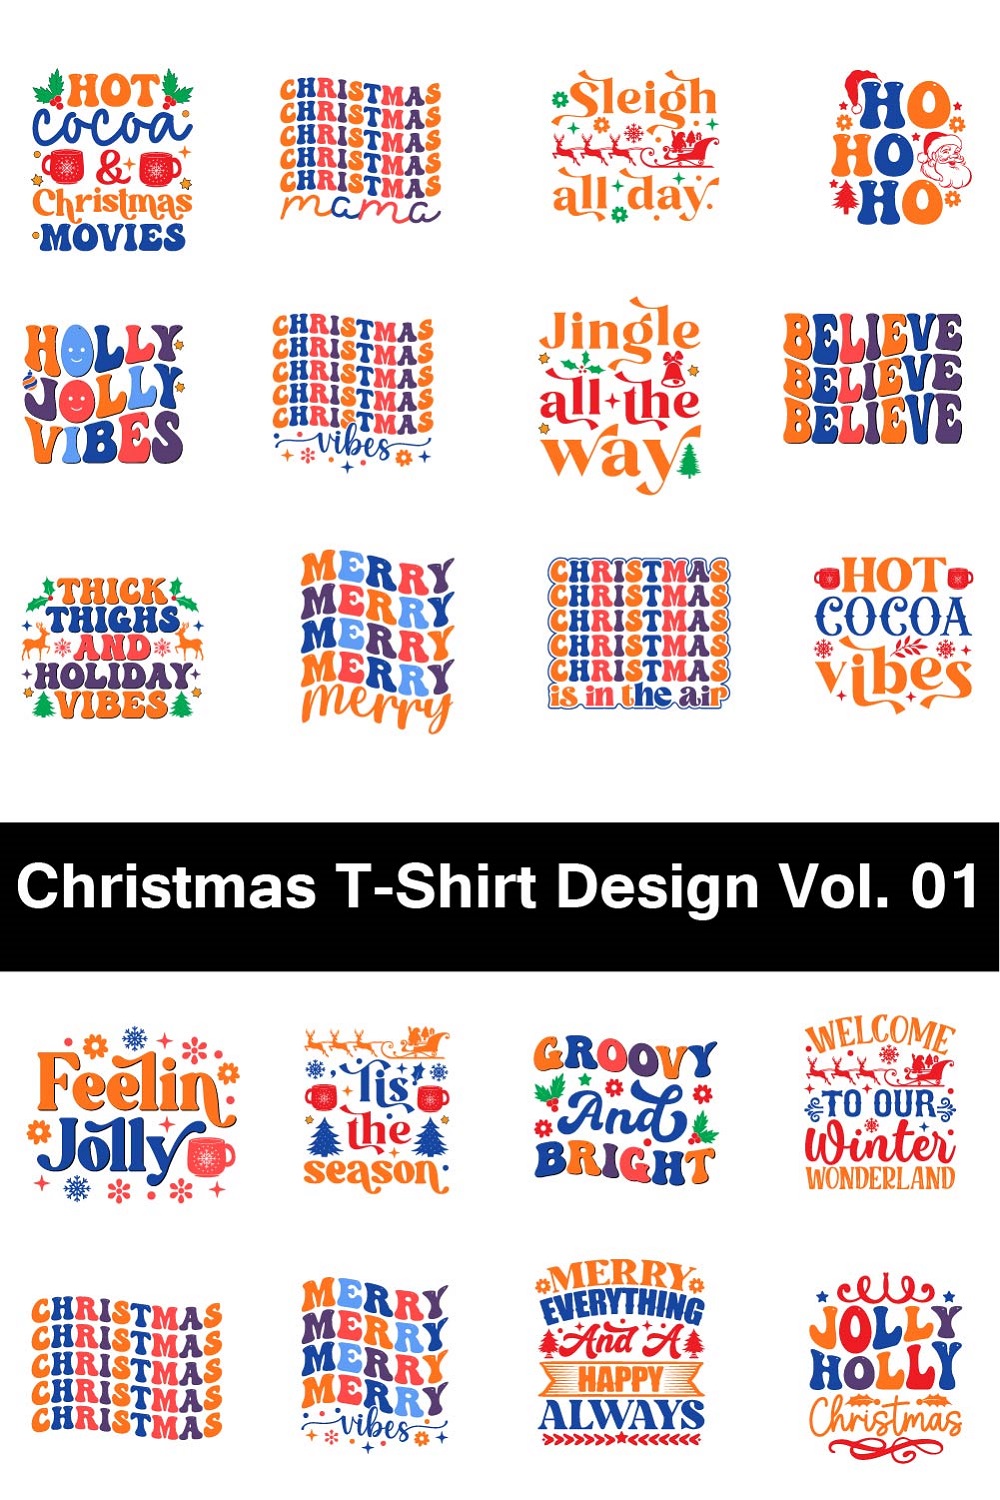 Retro Christmas T-Shirt Design pinterest image.